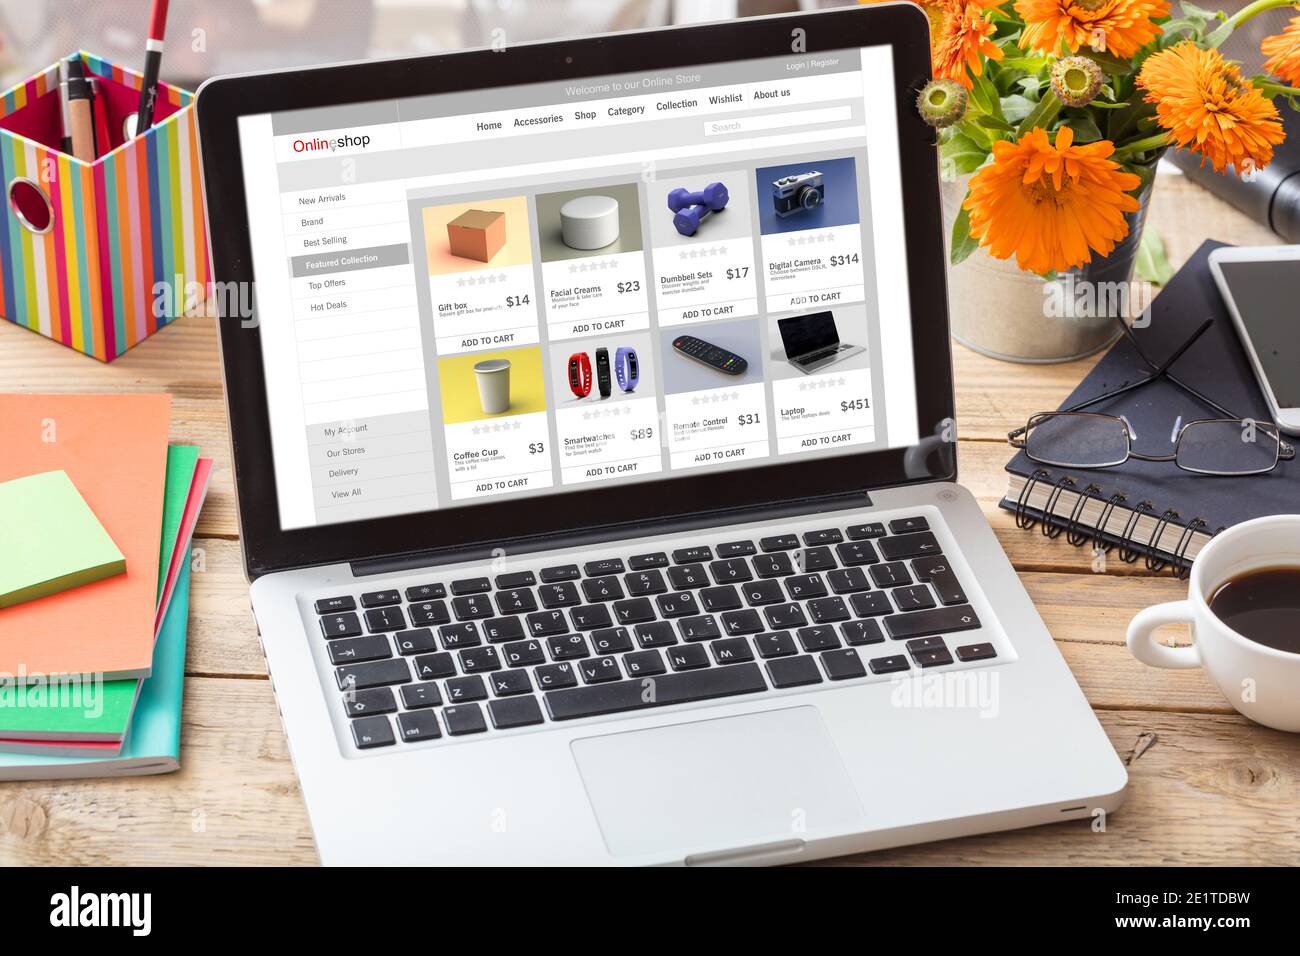 Eshop, ecommerce, digital marketing web page on a laptop computer screen,  office desk background. Online shop website concept Stock Photo - Alamy